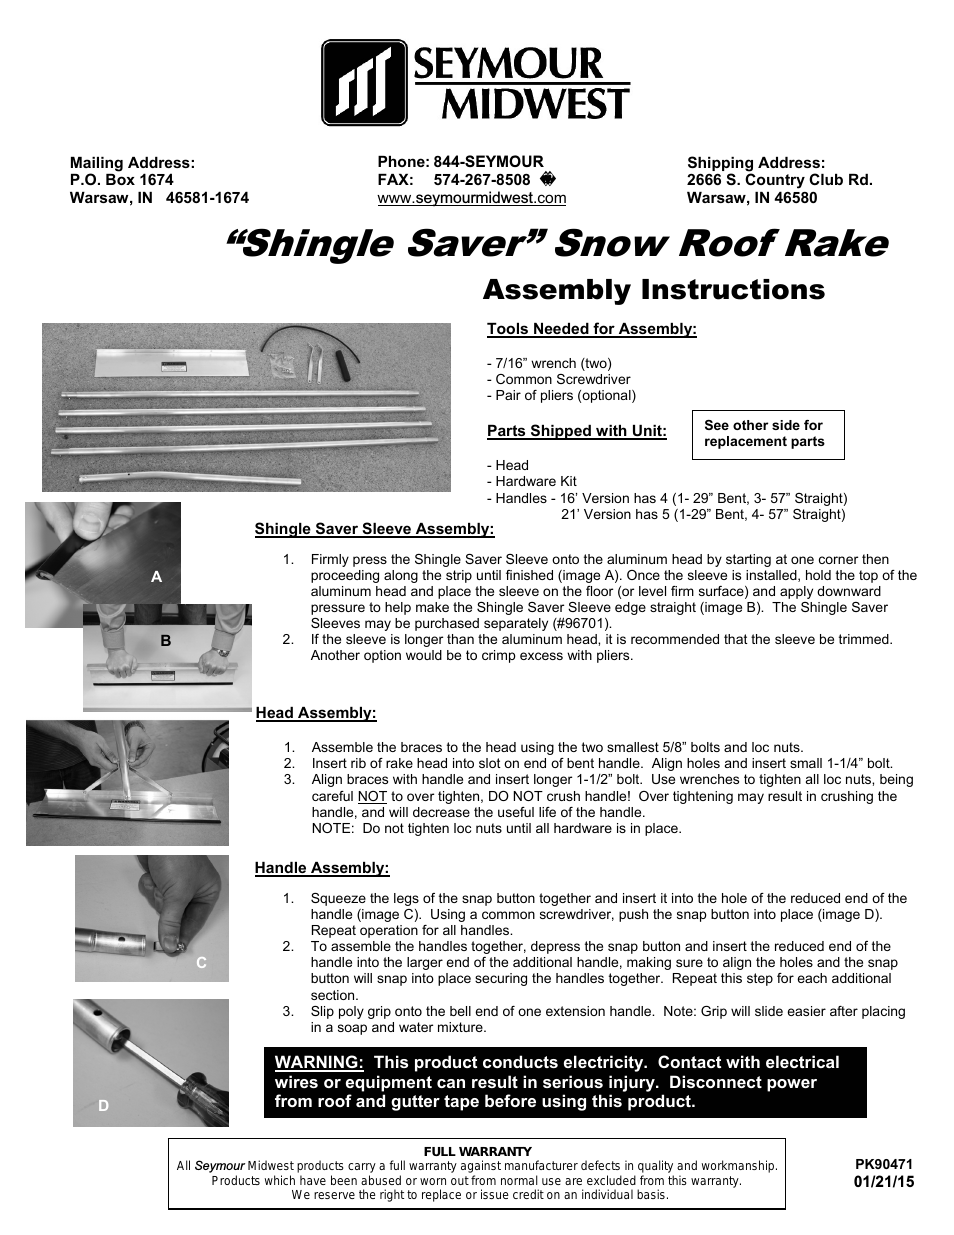 Shingle Saver Snow Roof Rake(PK90471)